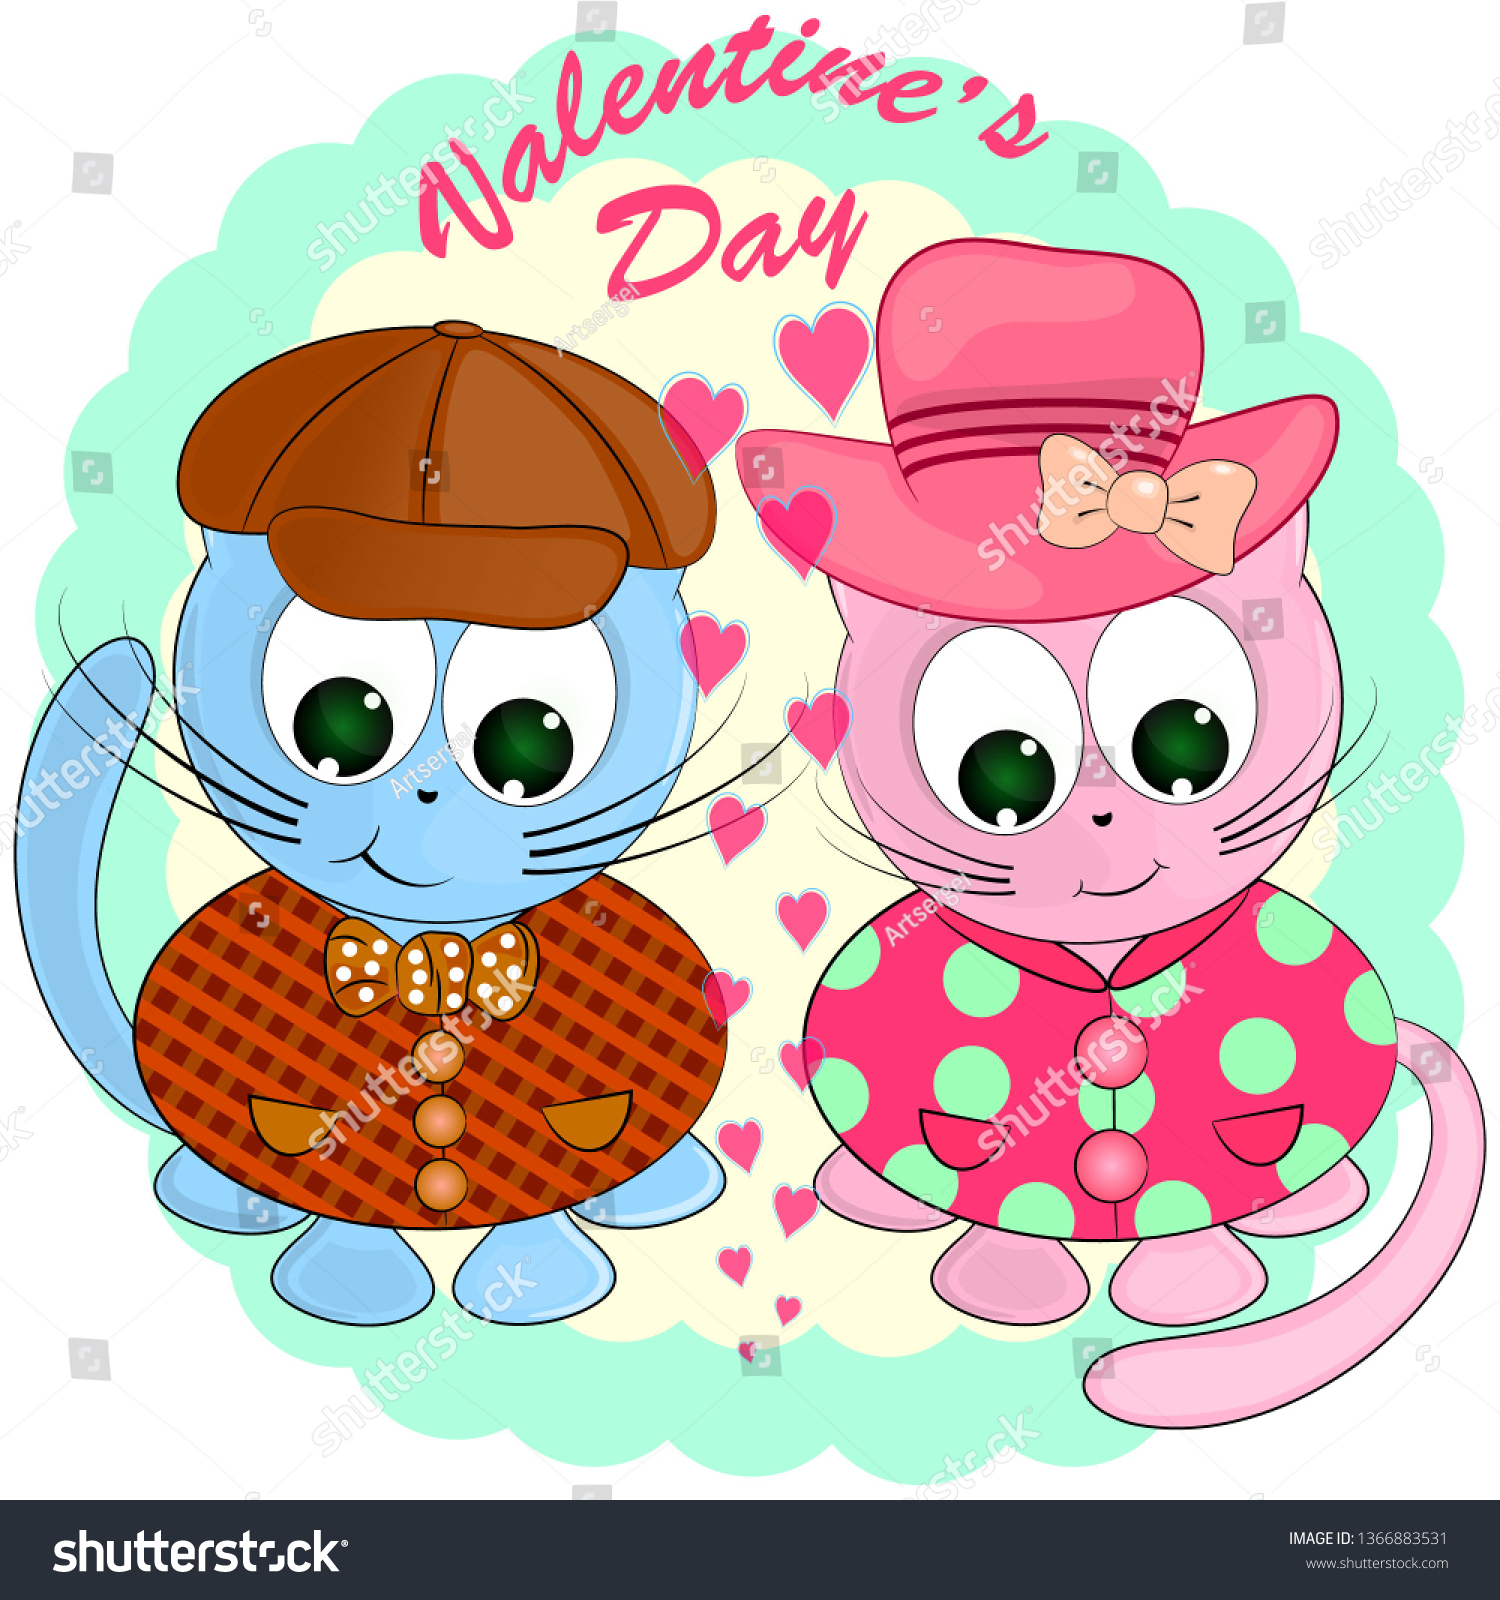 Cute Cartoon Vector Illustration Two Cats Stock Vector Royalty Free Shutterstock